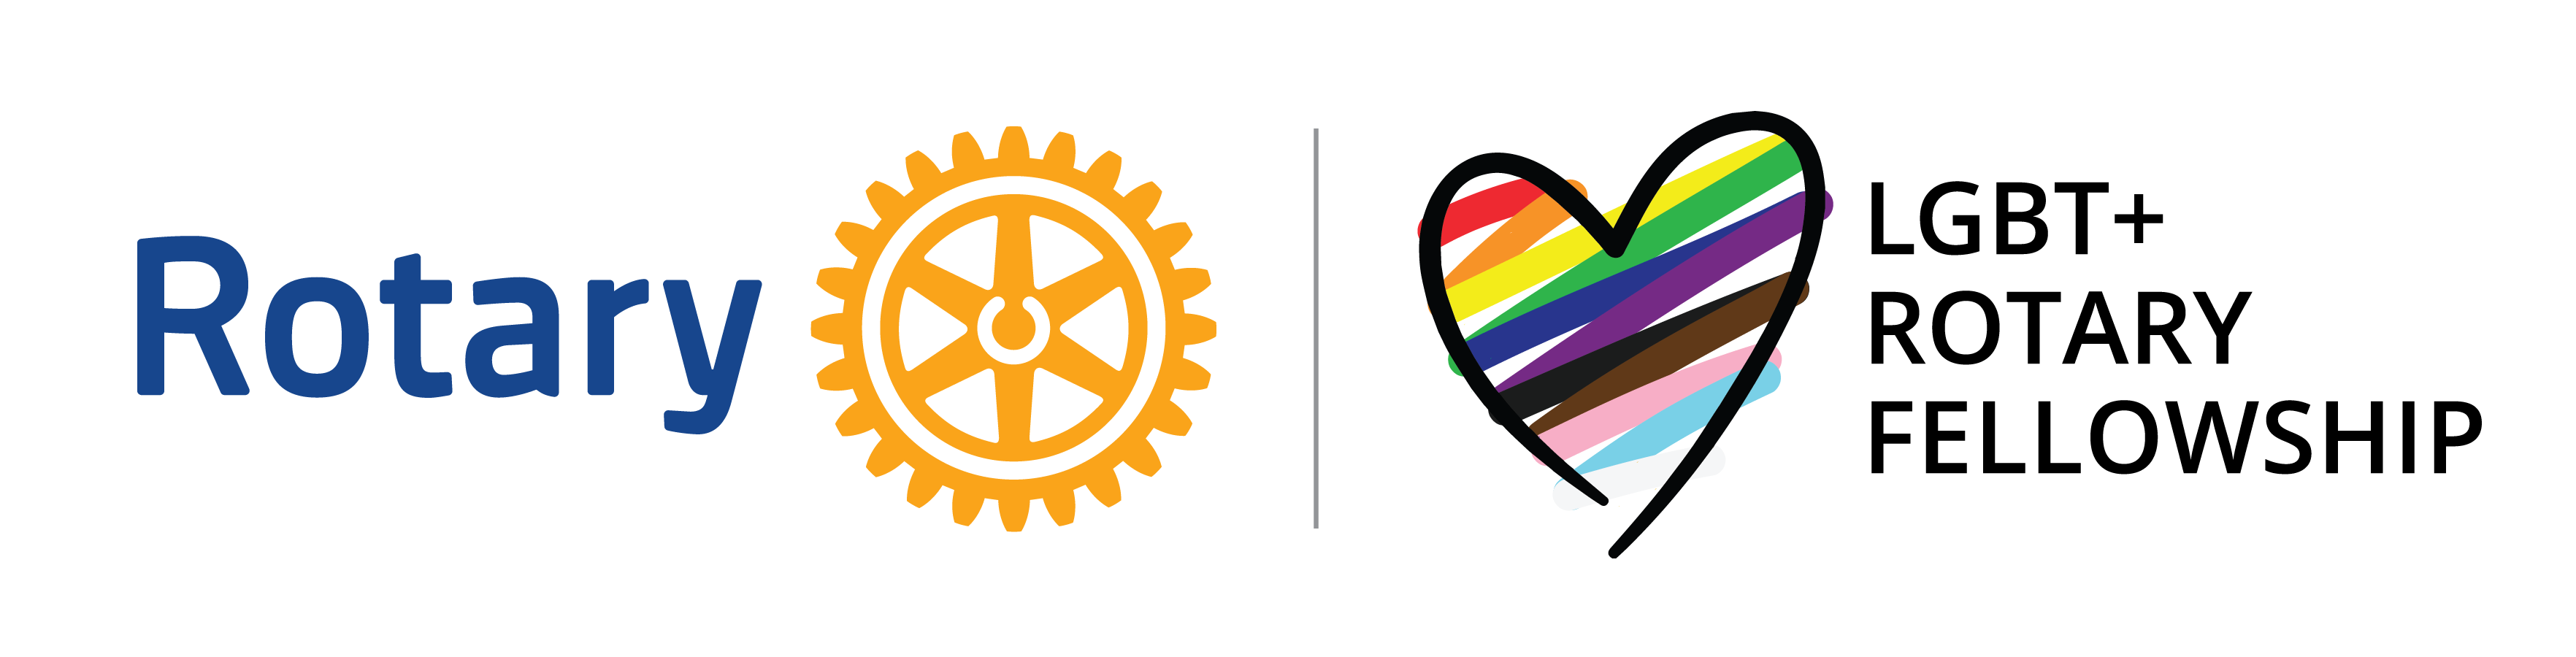 Rotary LGBT+ Fellowship